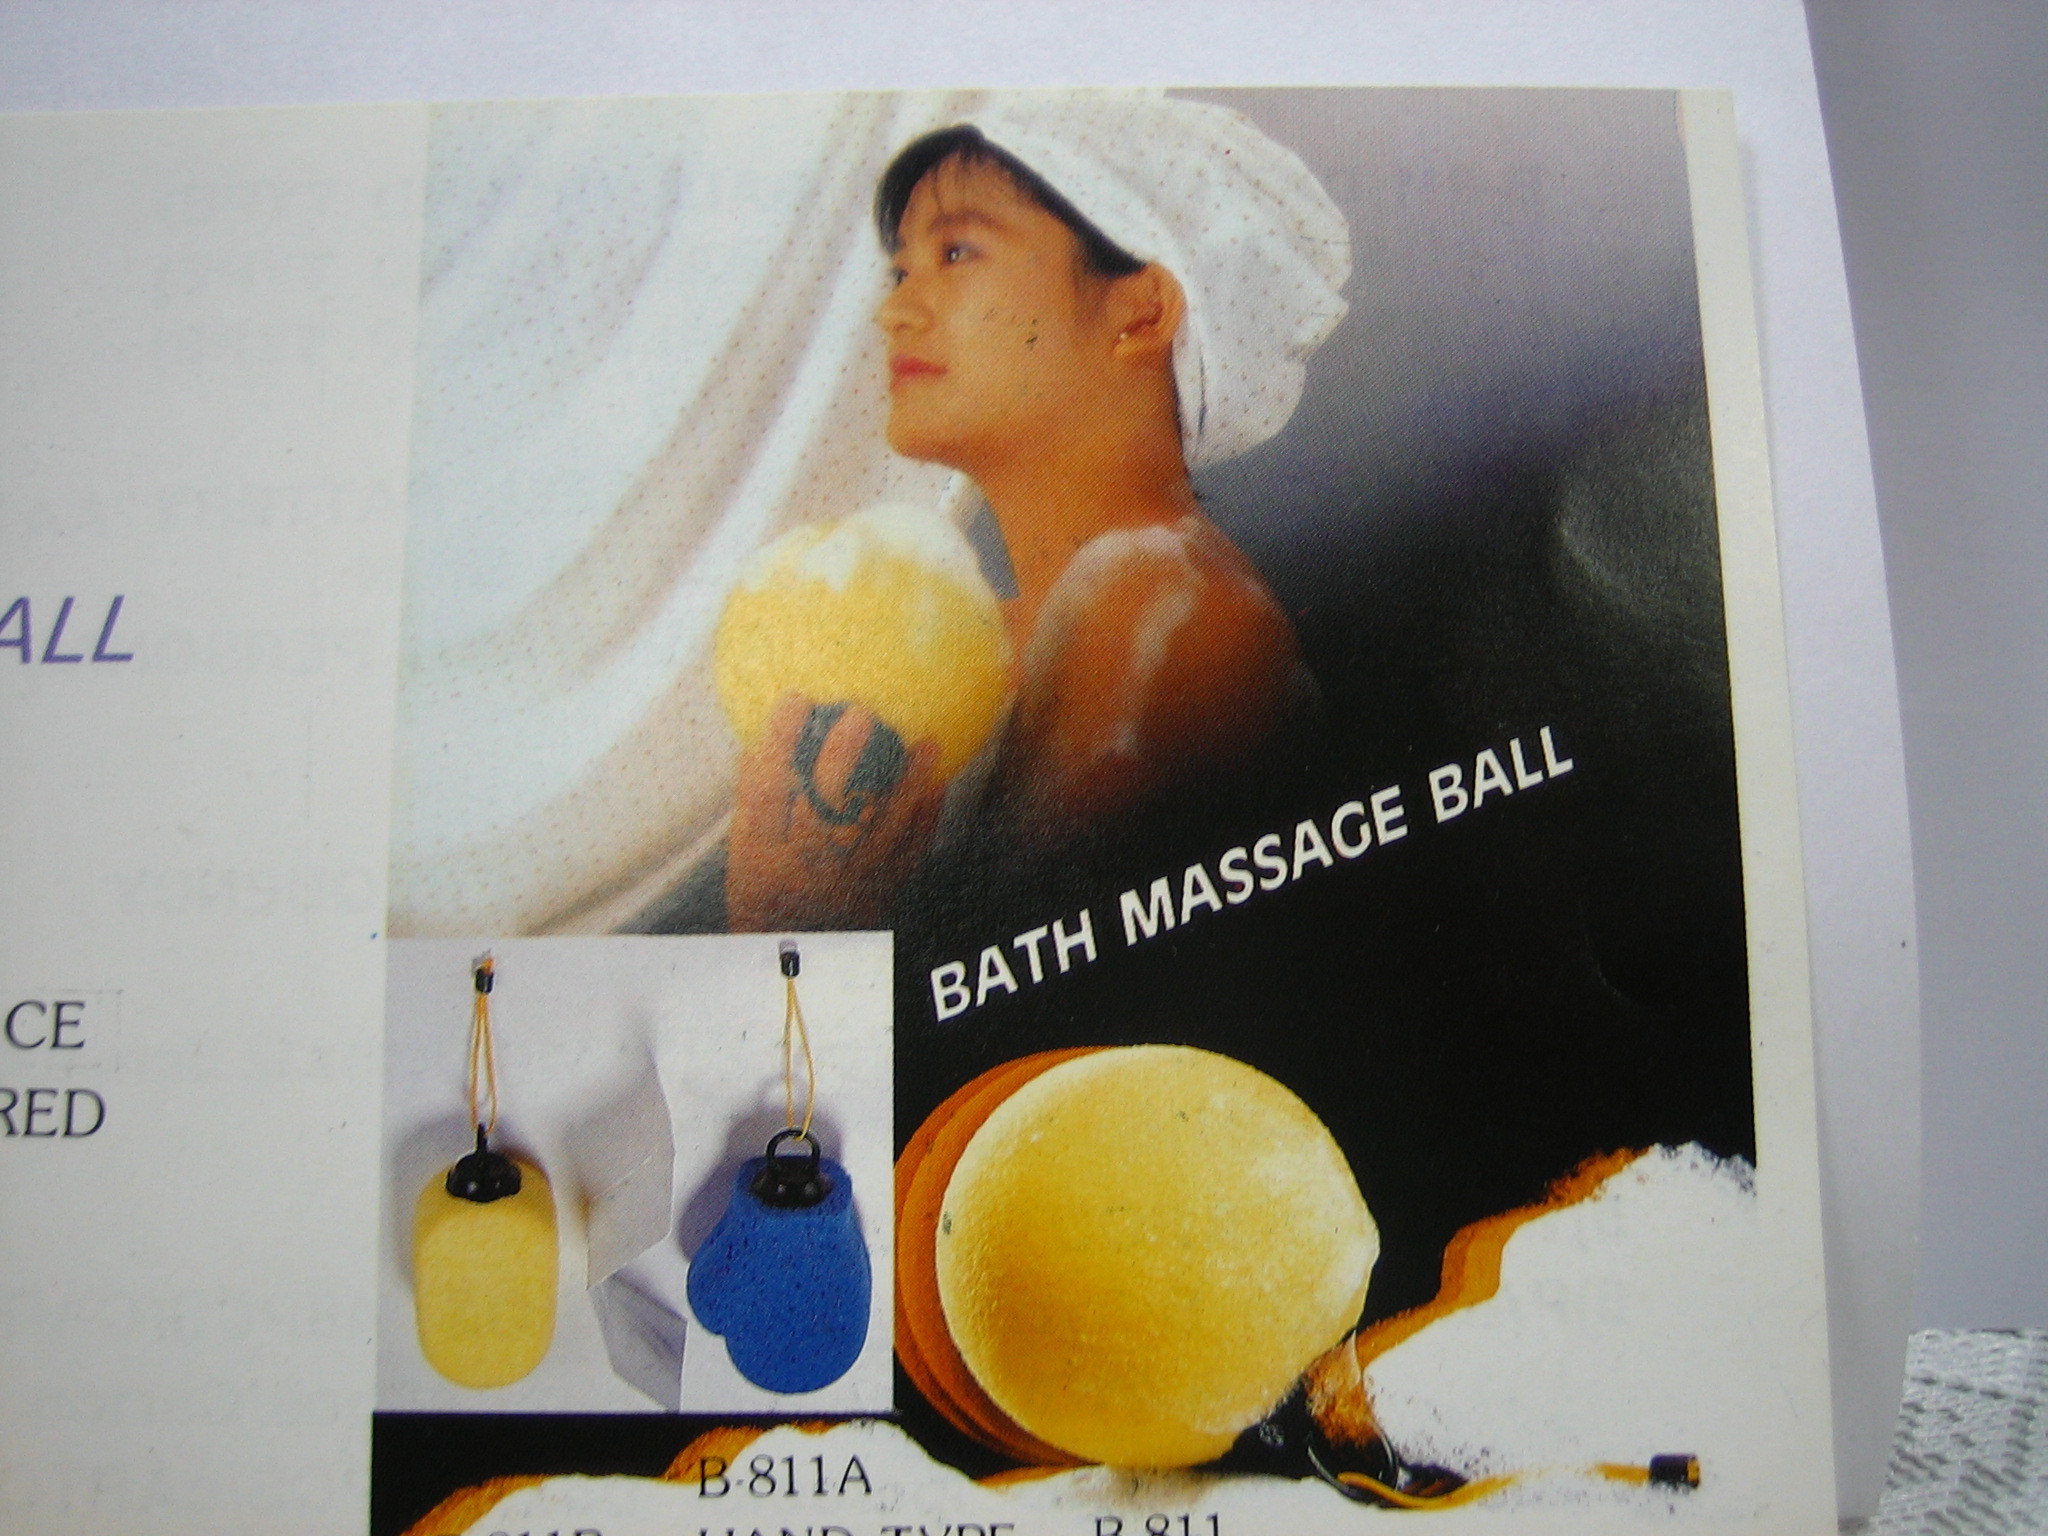 Bath massage ball